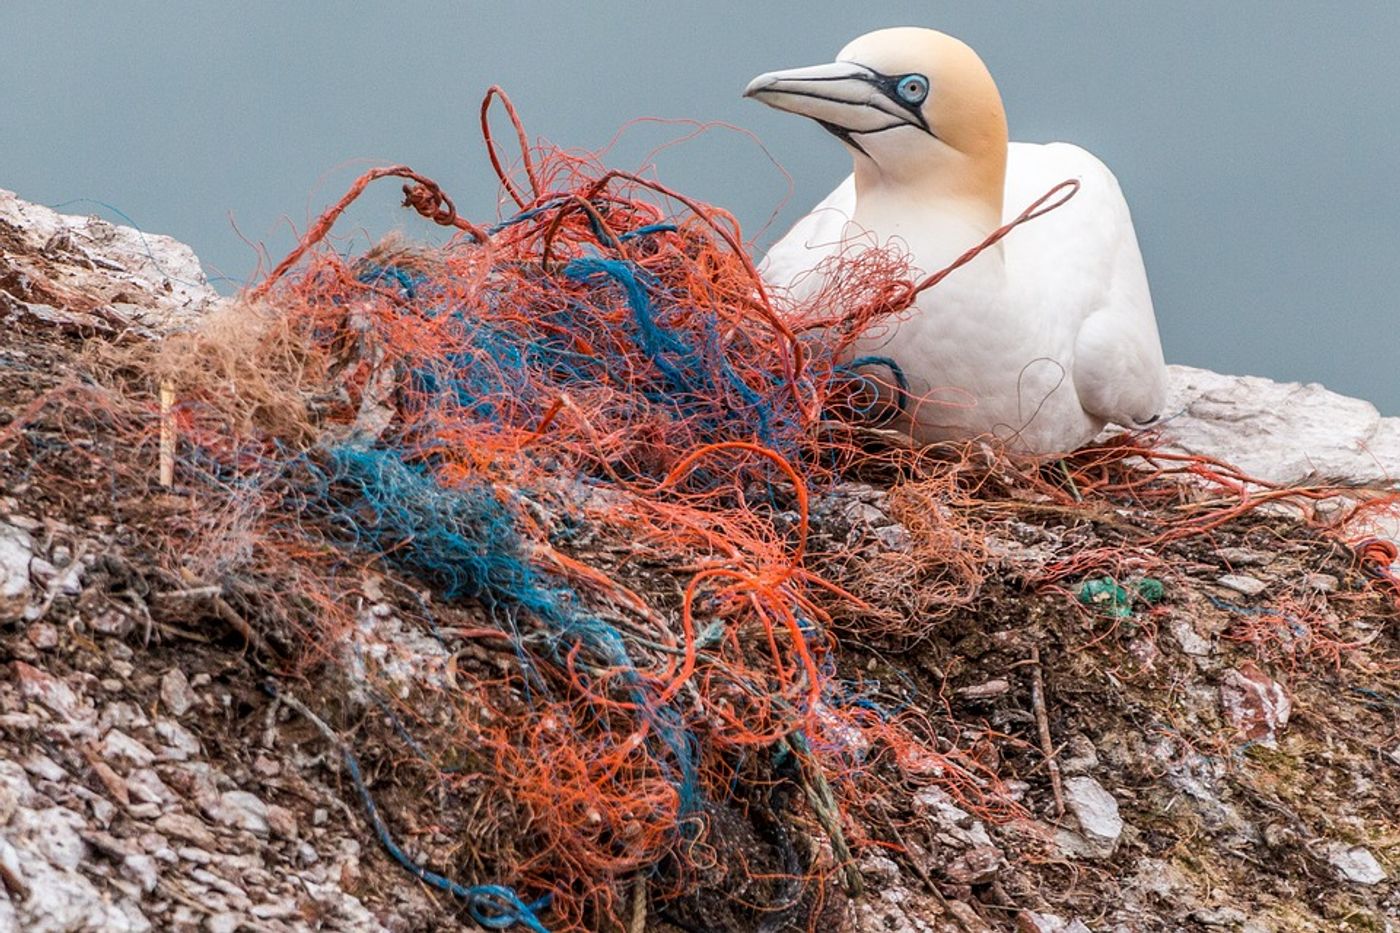 The global plastic crisis threatens wildlife and humans alike. Photo: Pixabay